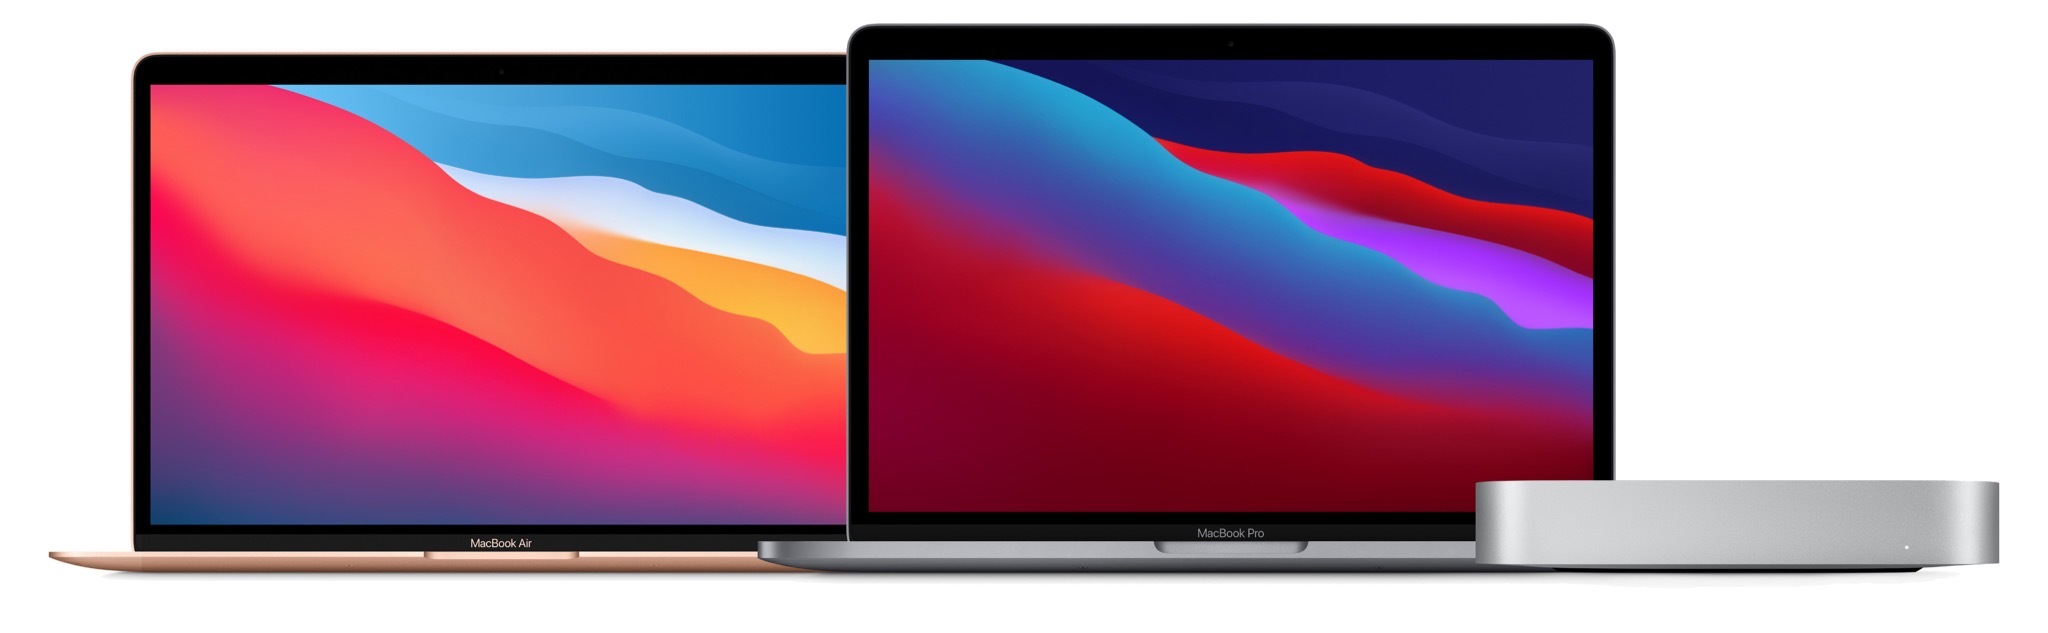 apple macbook pro 2018 announcement